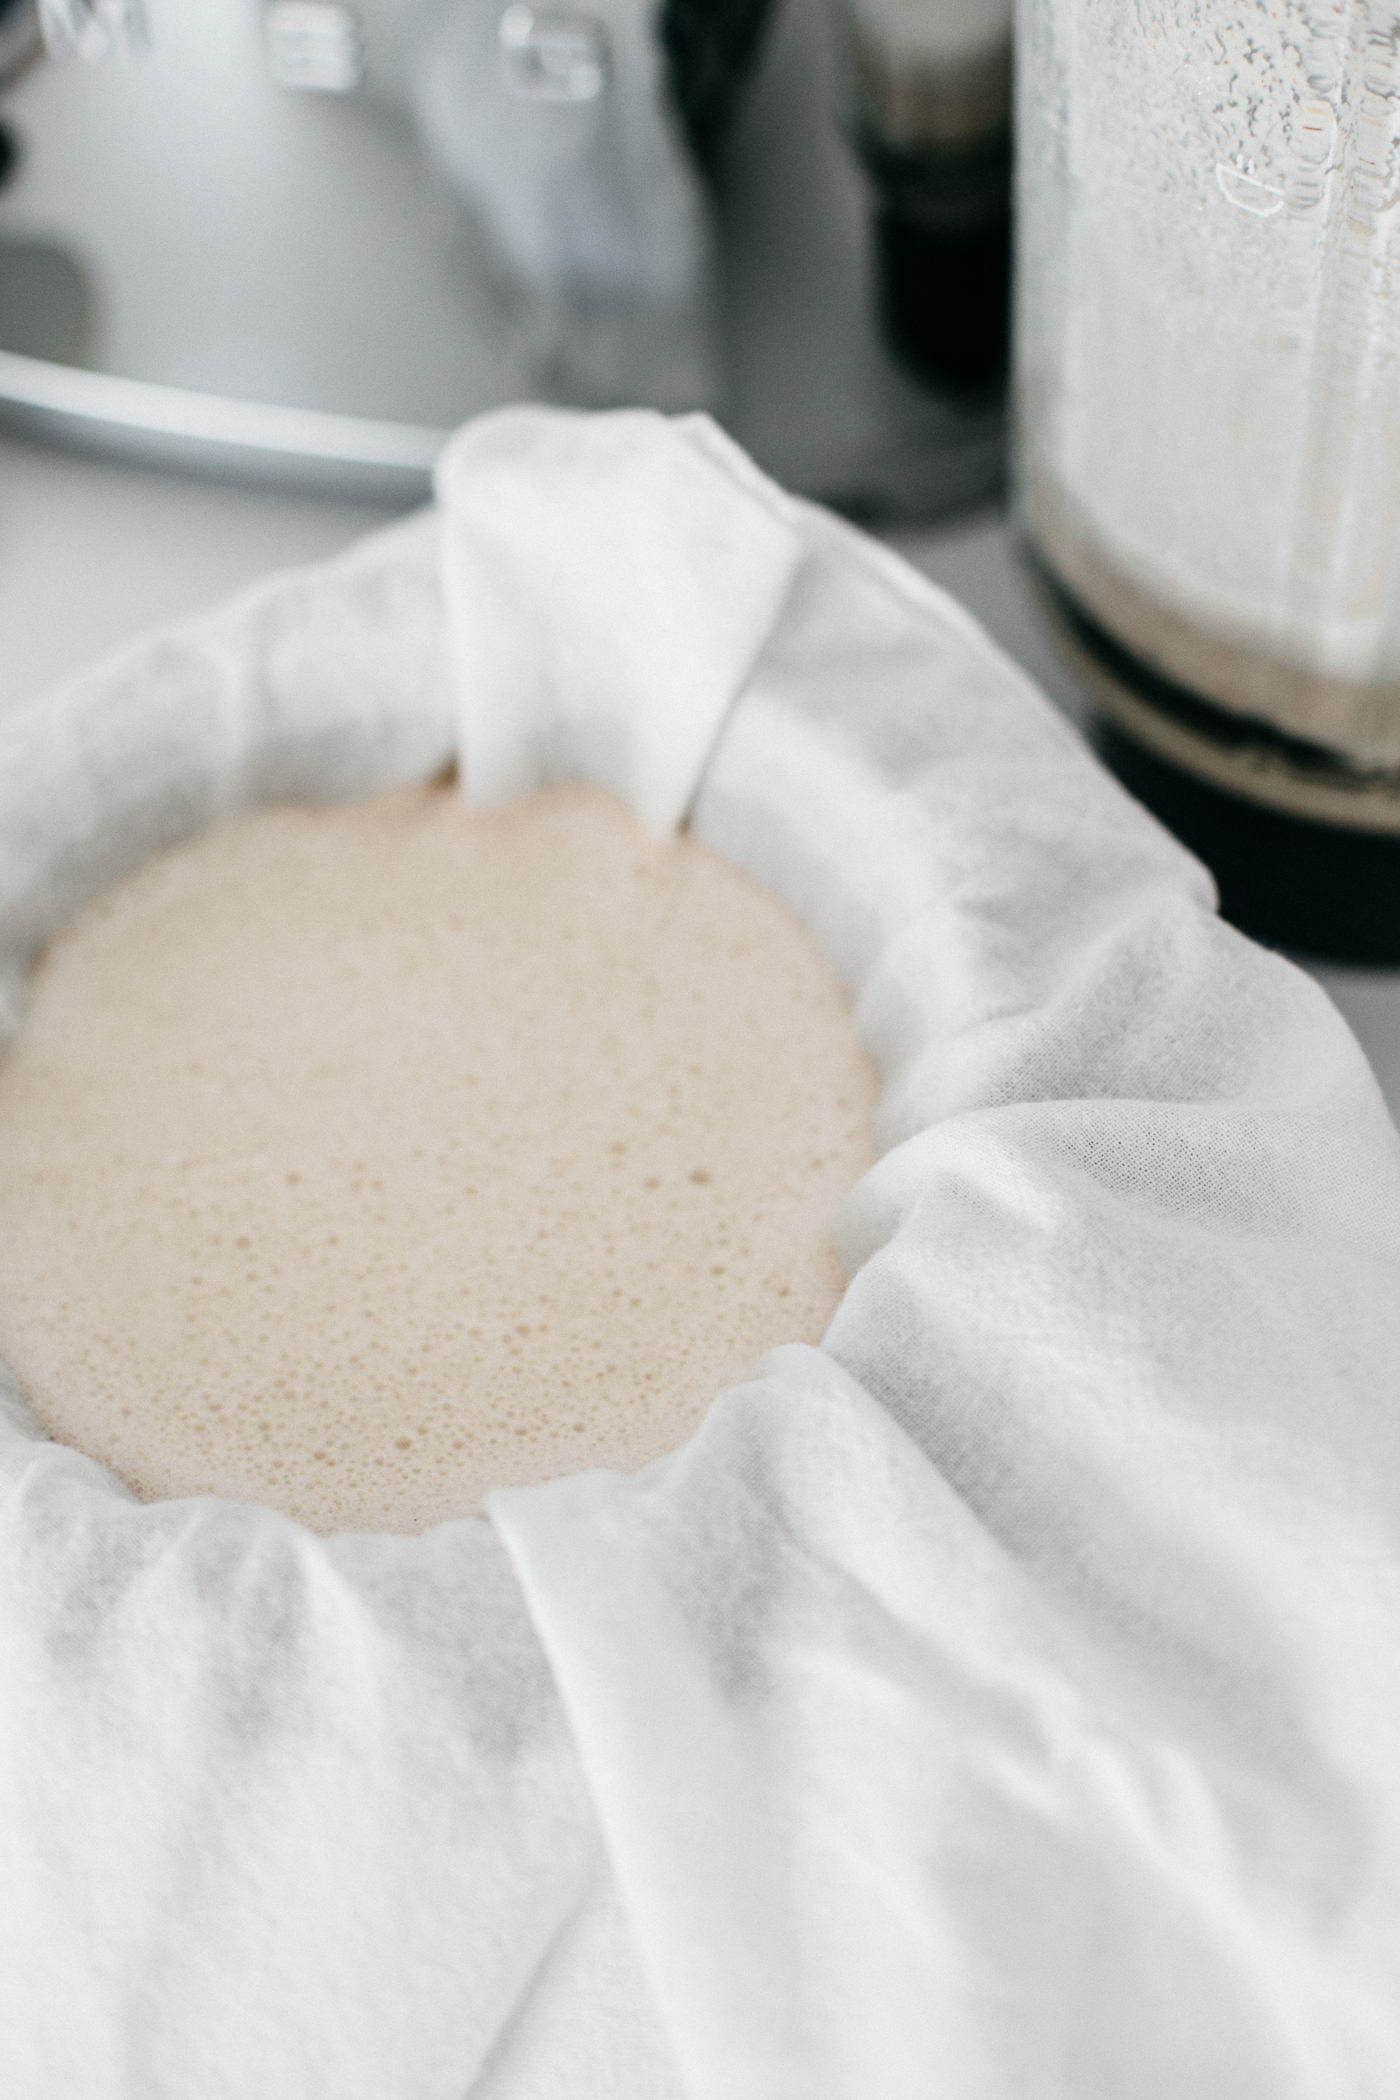 Mandelmilch Rezept: Mandelmilch selber machen | Love Daily Dose